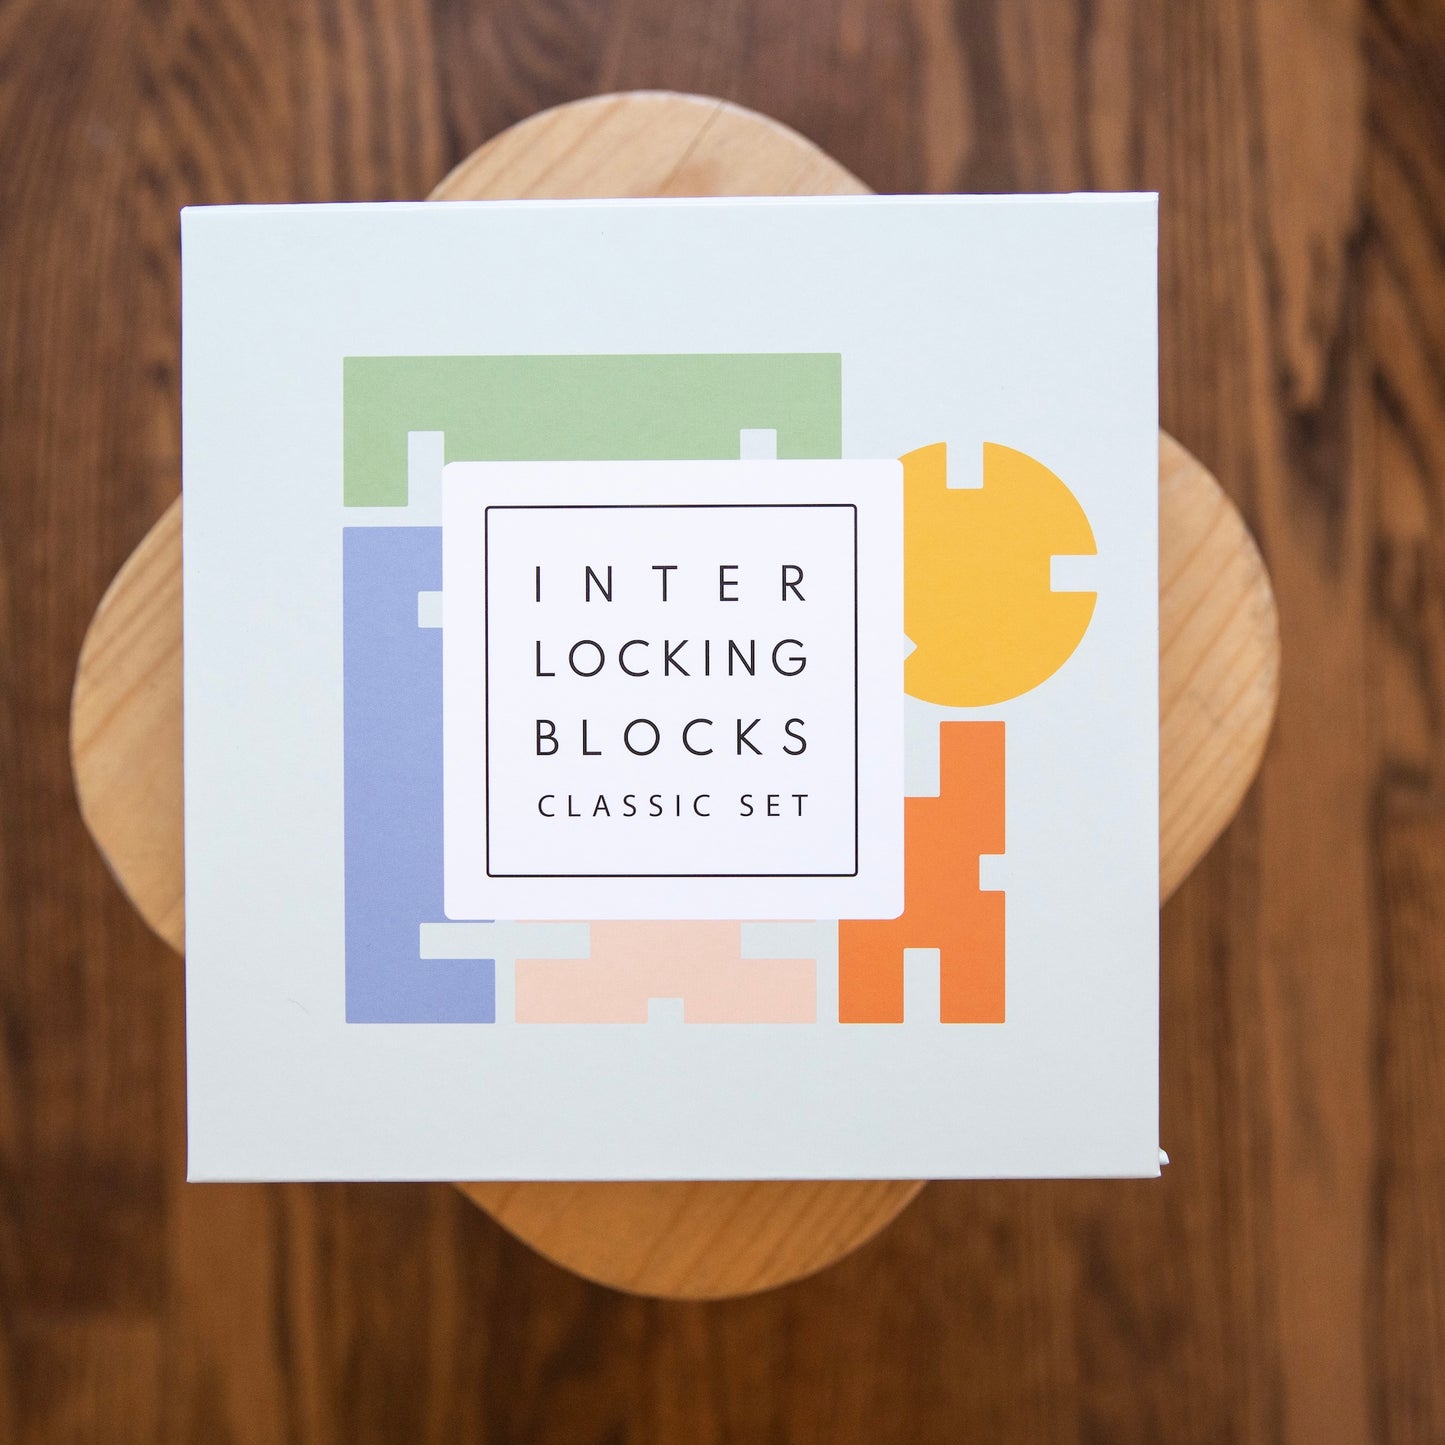 interlocking blocks - classic set